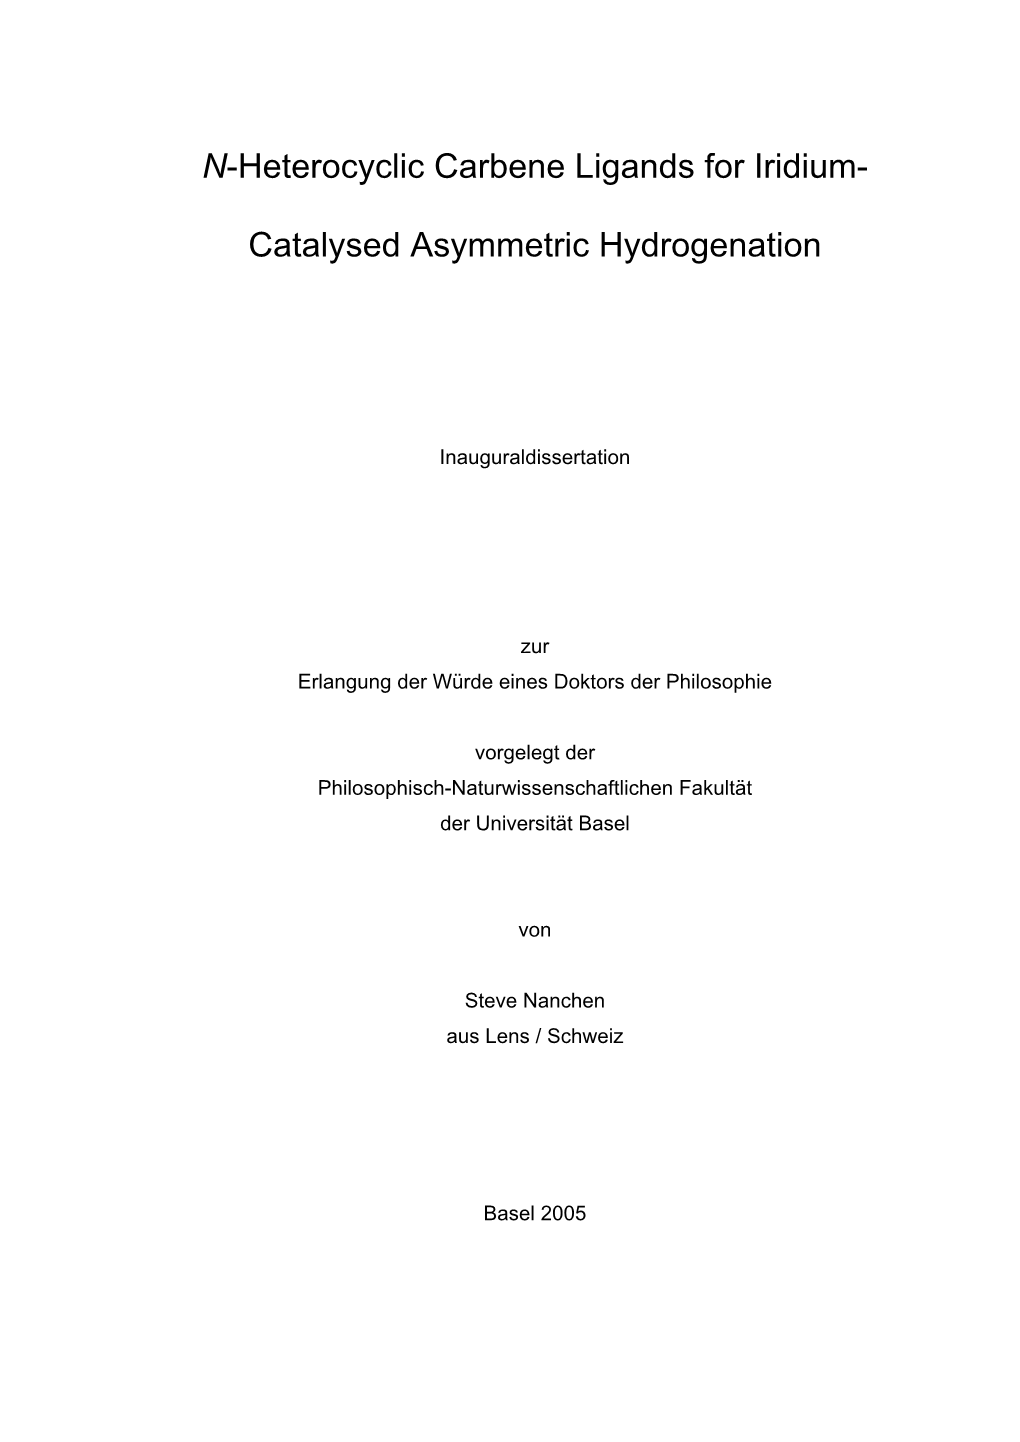 N-Heterocyclic Carbene Ligands for Iridium- Catalysed Asymmetric Hydrogenation